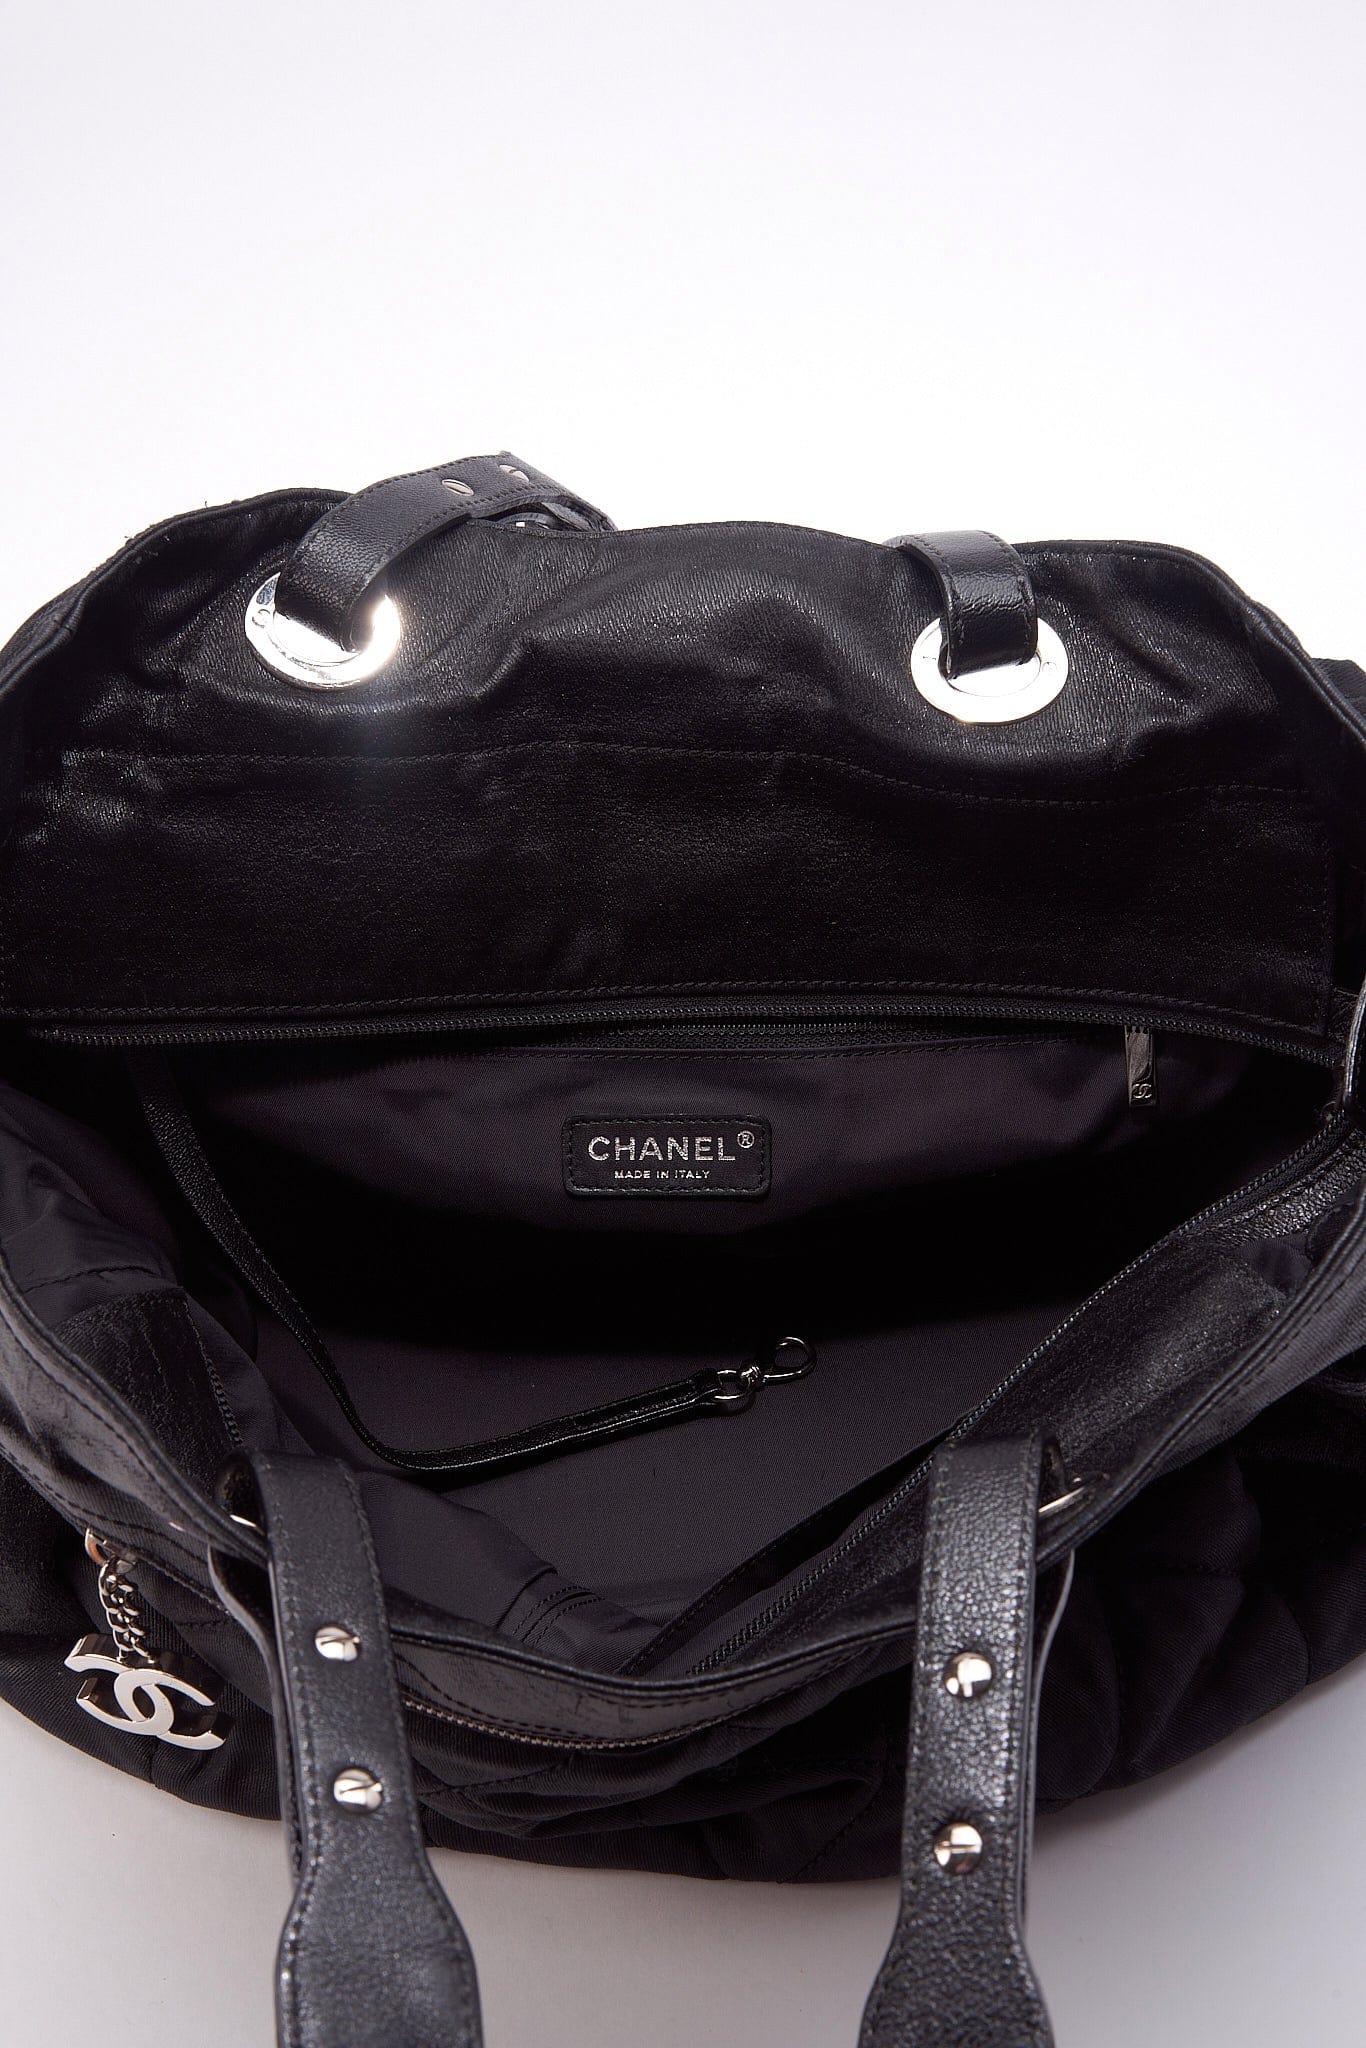 Chanel Paris Biarritz Nylon Tote Bag